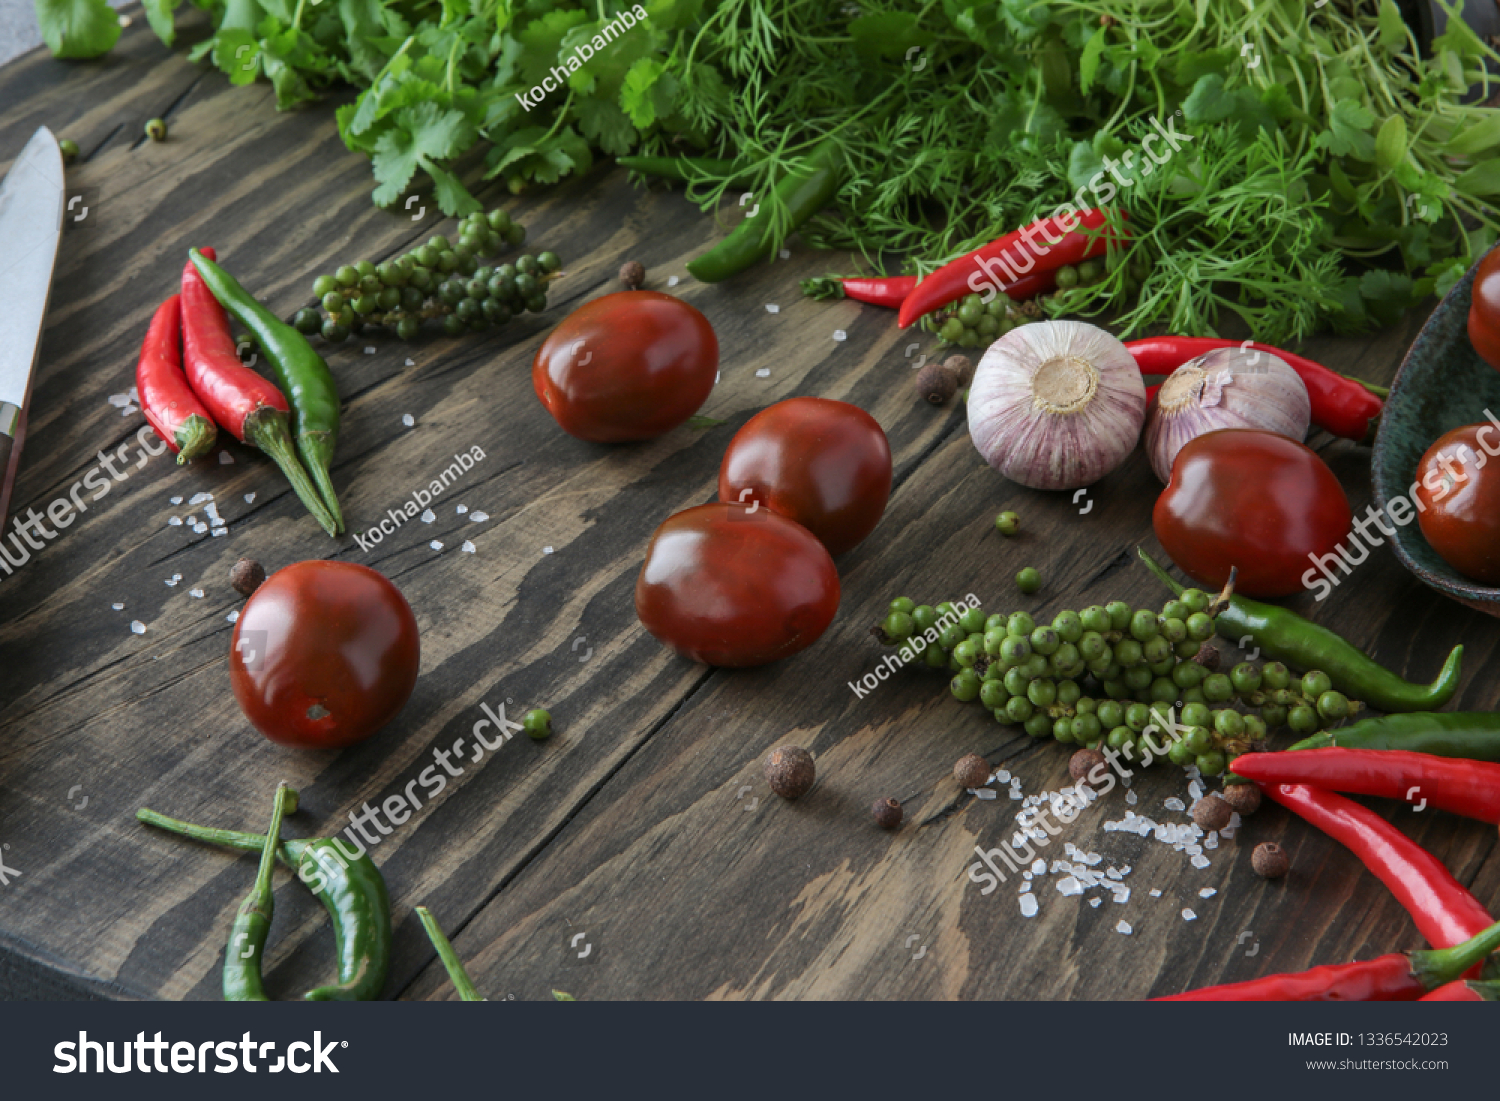 chili, allspice, garlic, parsley, coriander, dill, tomatoes on the table #1336542023